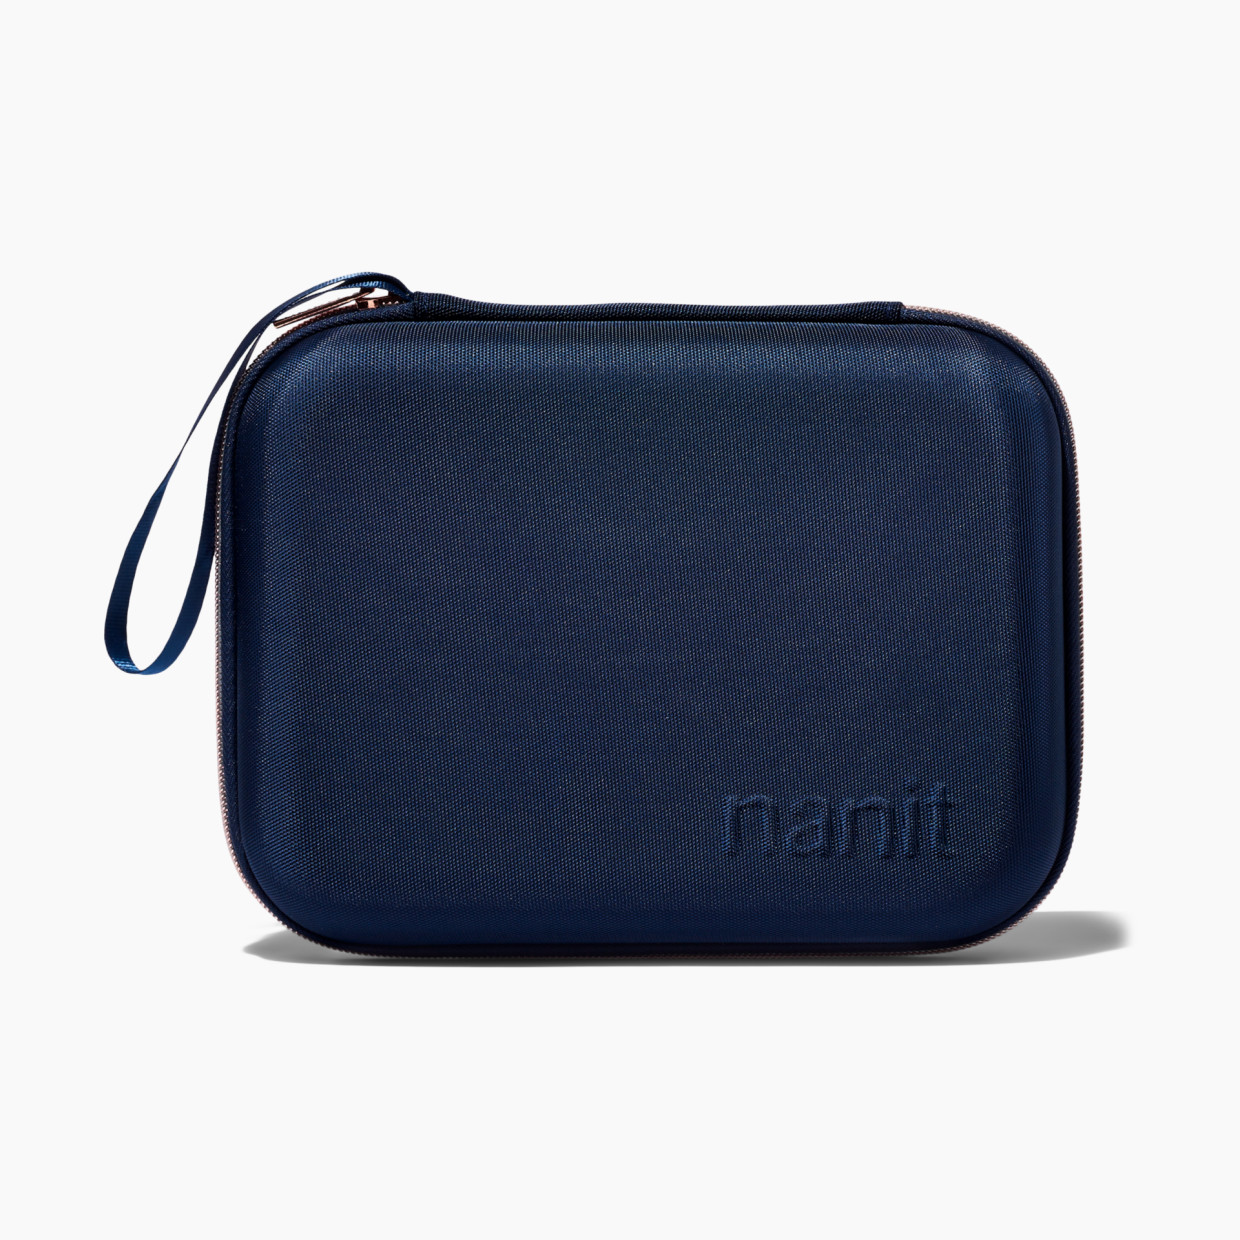 Nanit Travel Case - Blue.